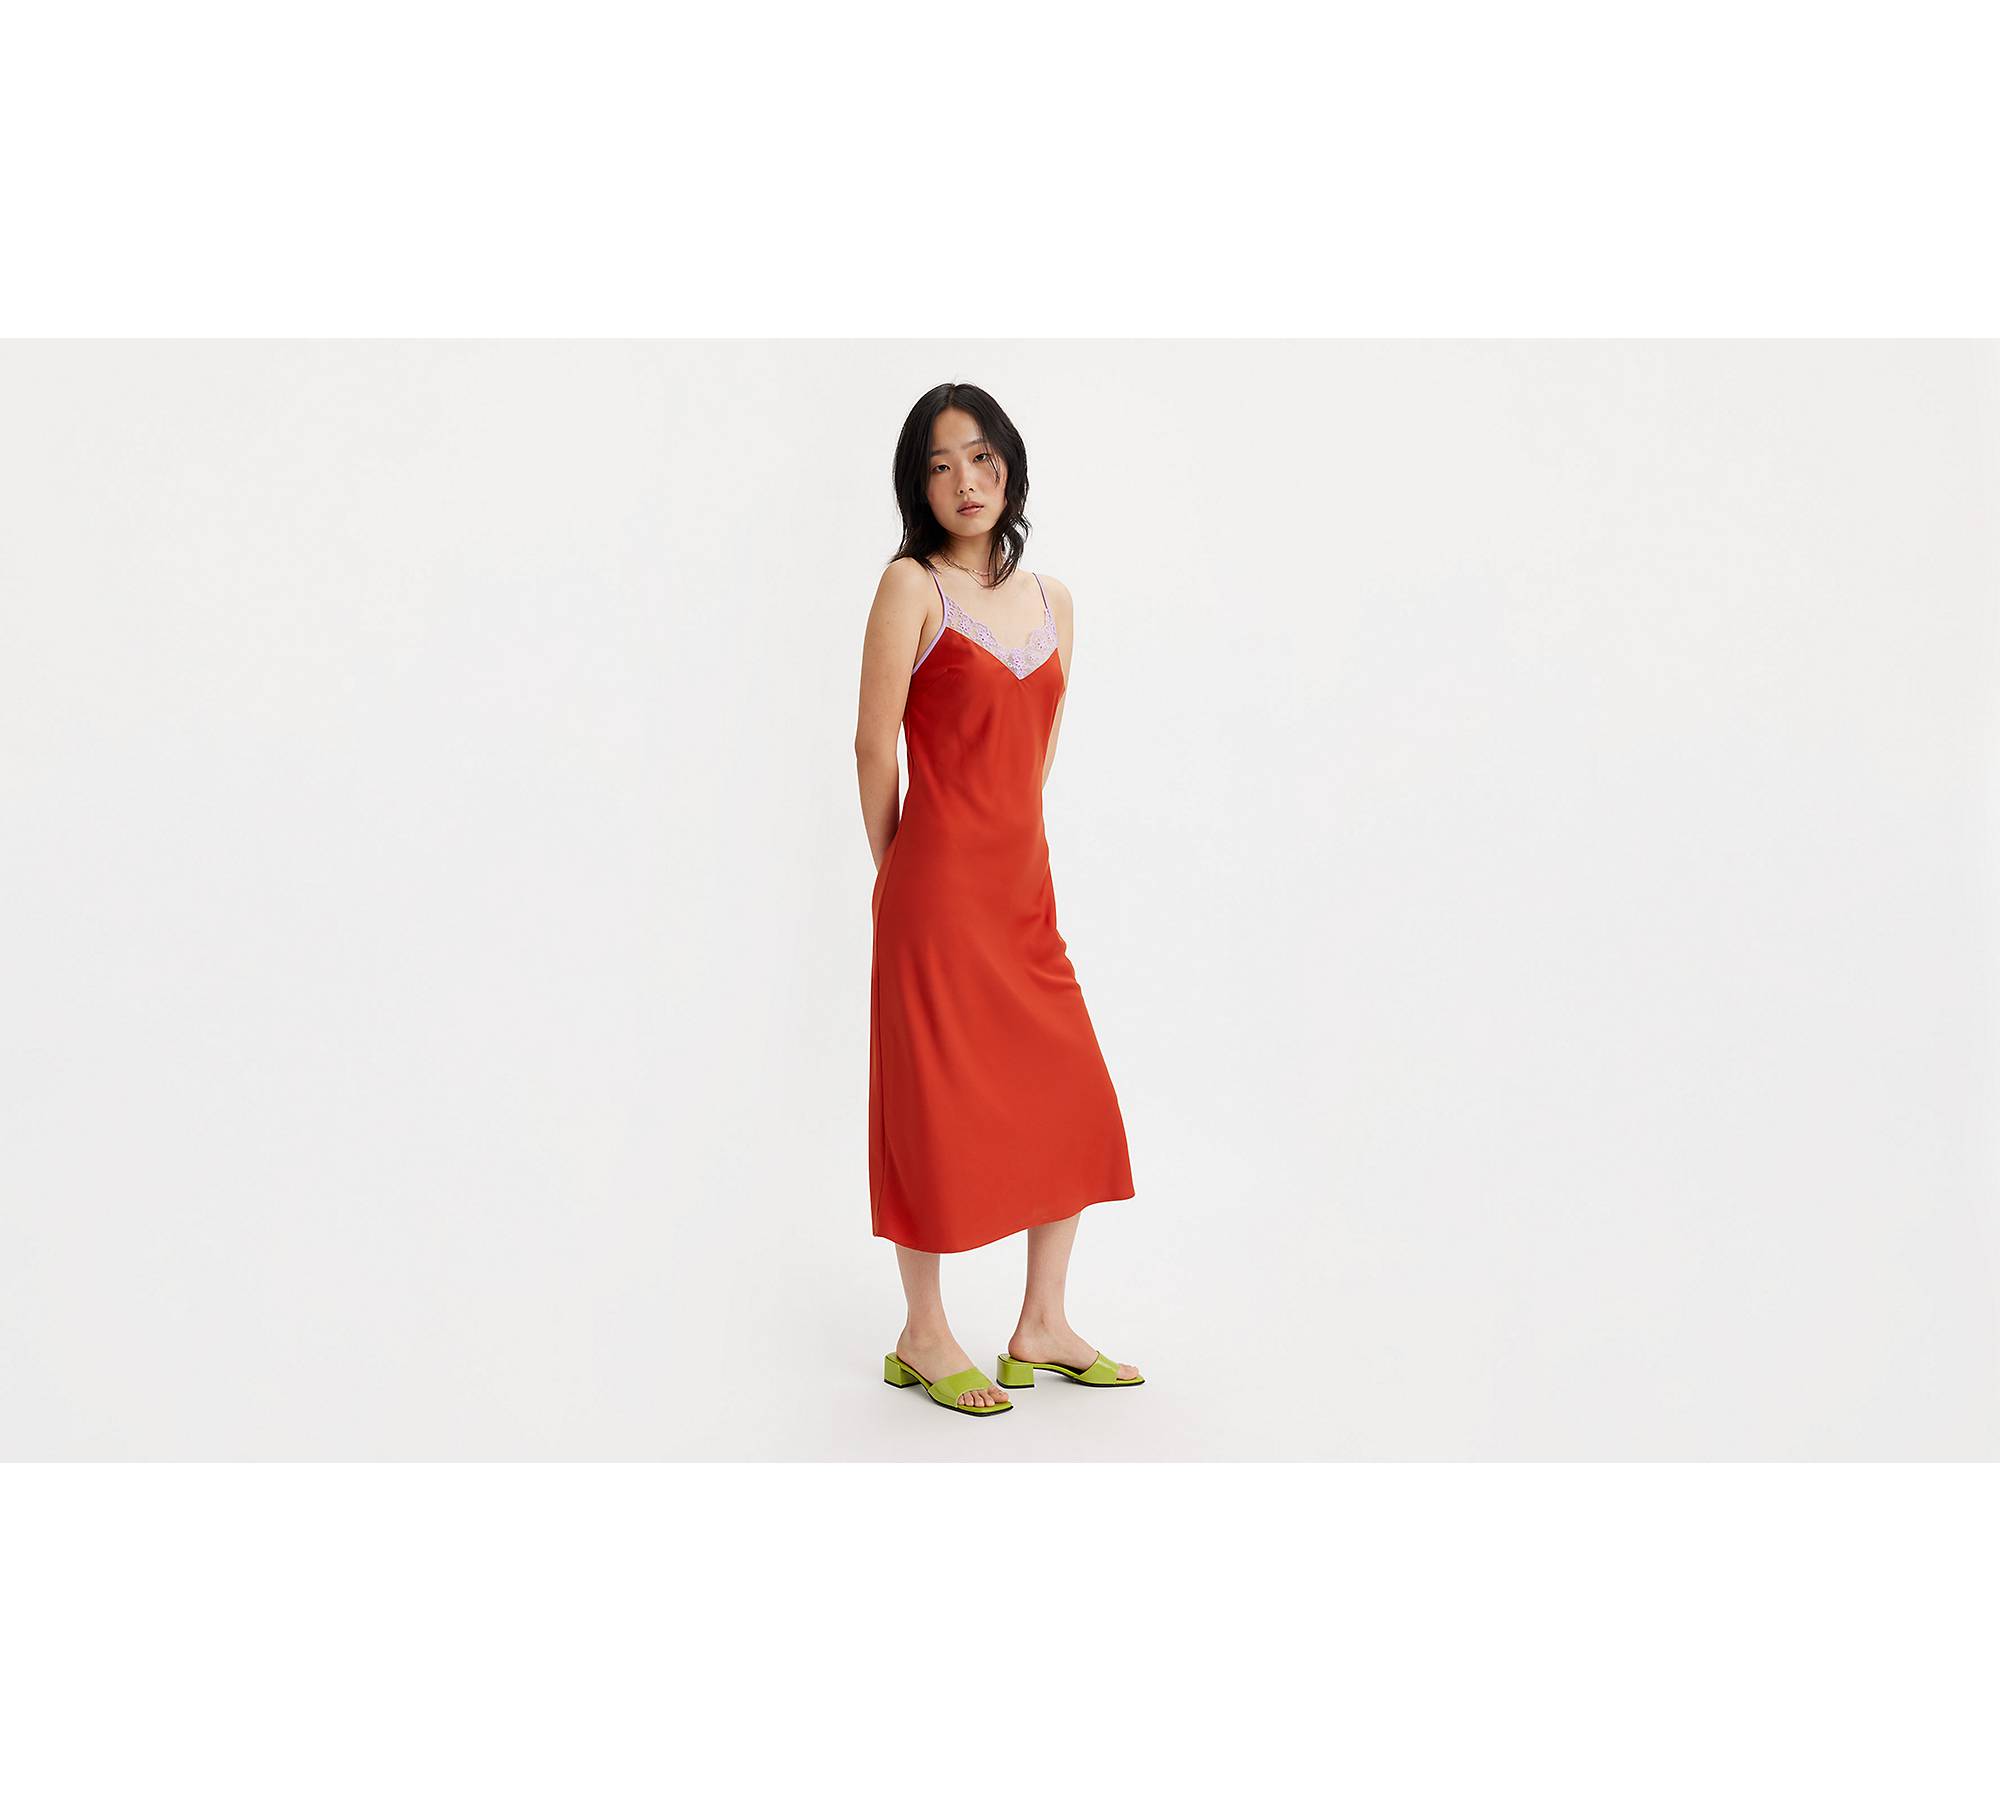 Zara red Satin long Camisole slip Dress woman's size extra small